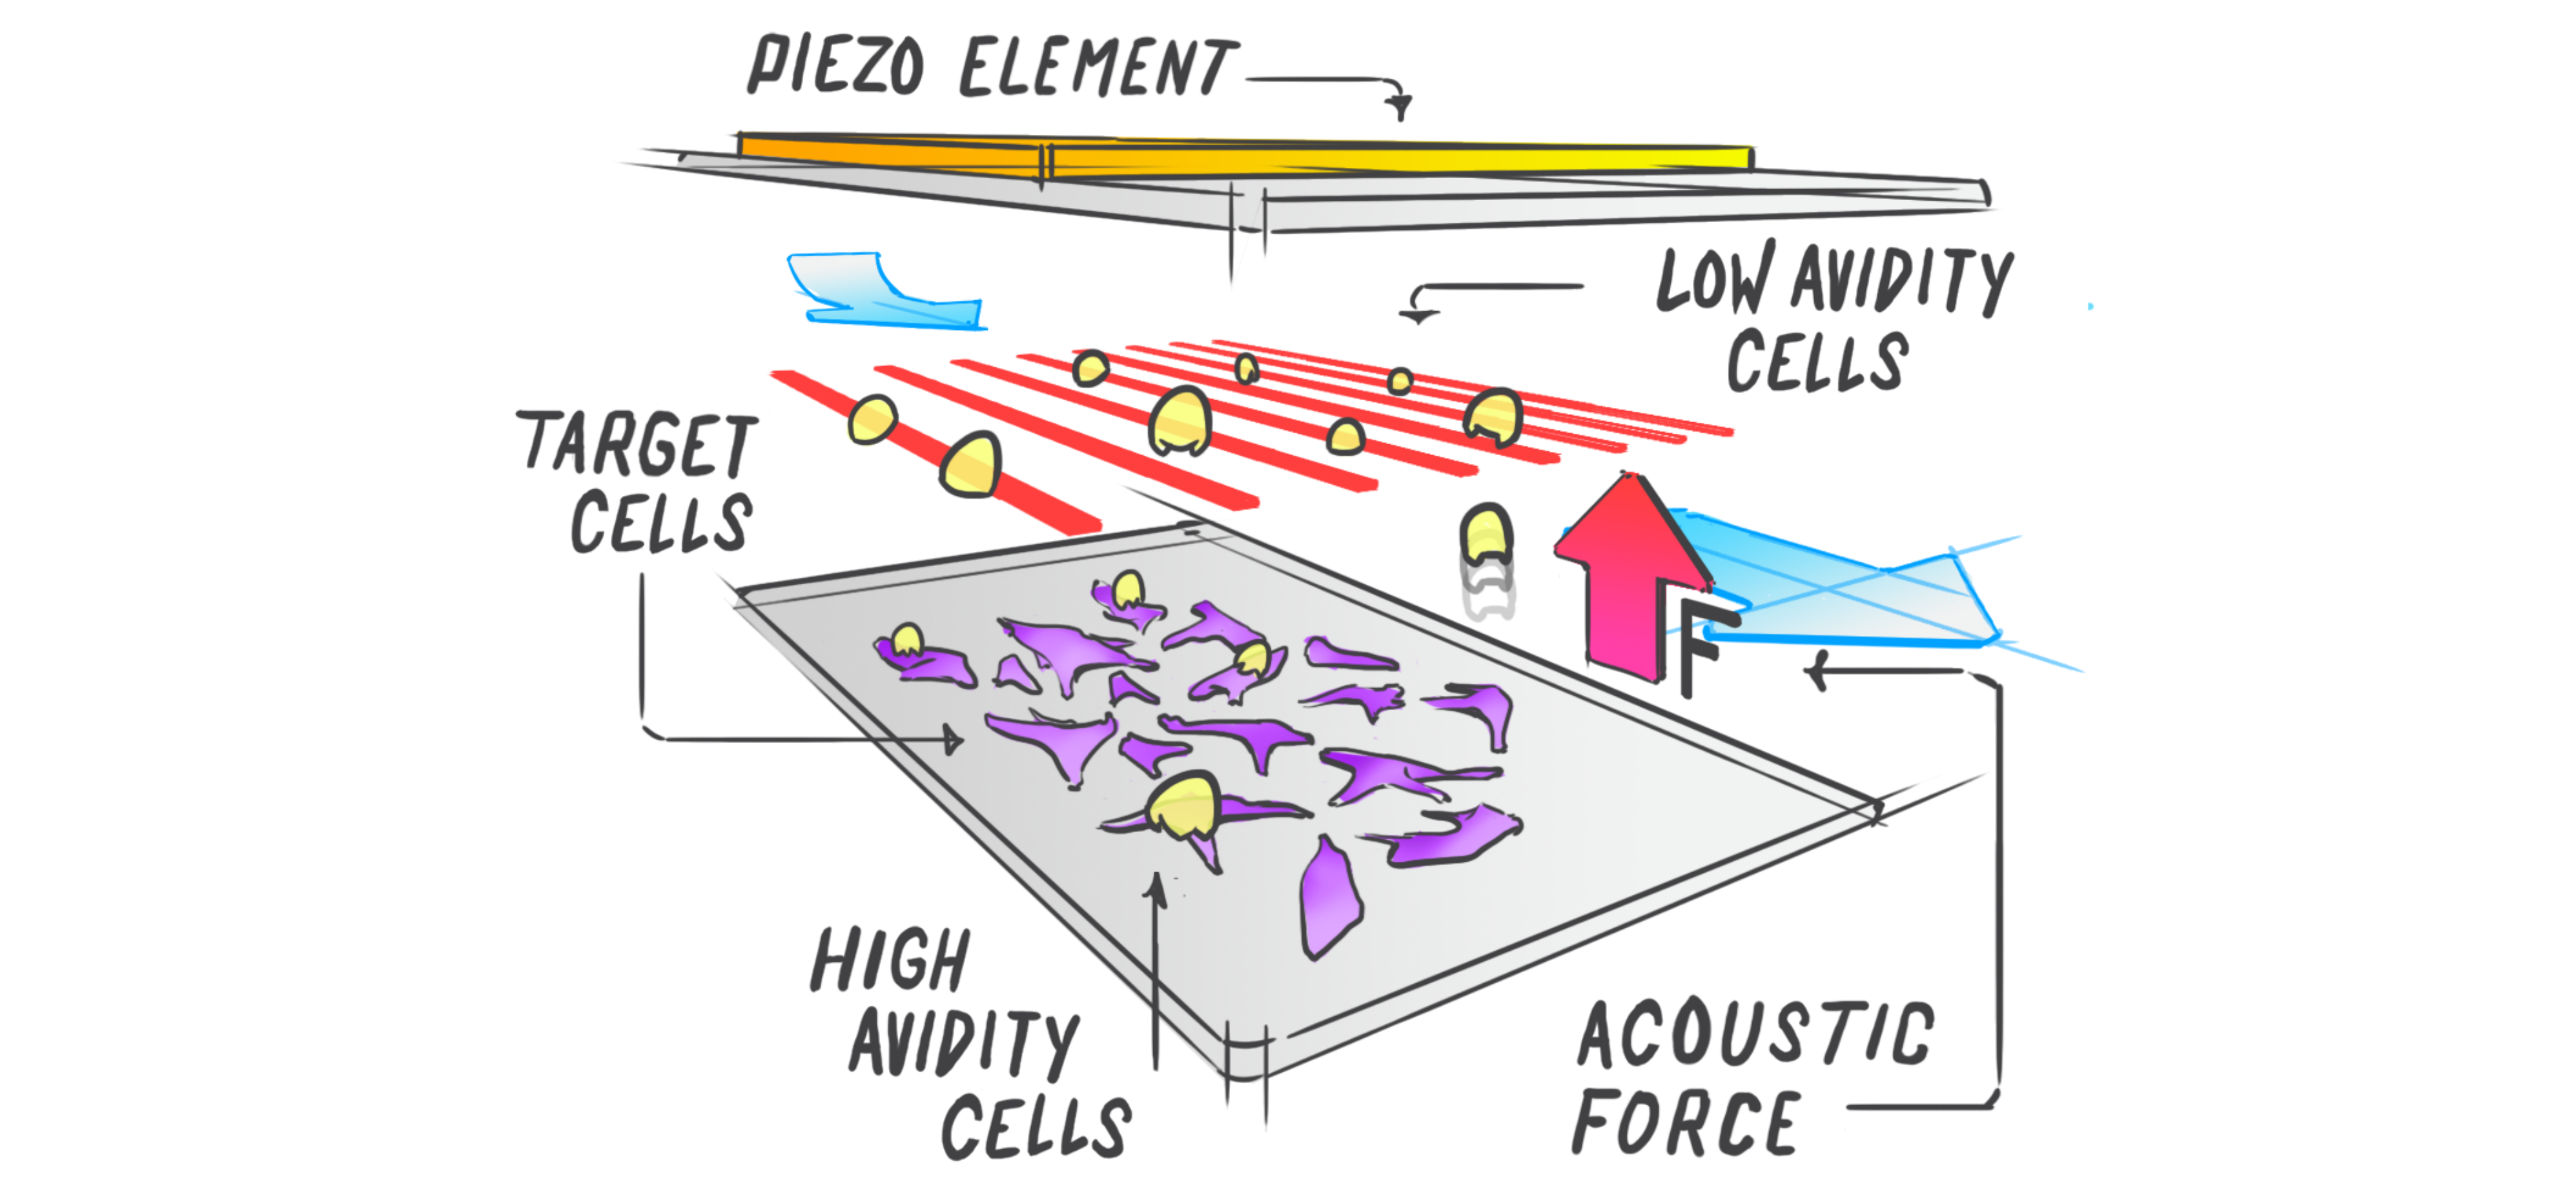 High-Throughput Label-free Cell Interaction Studies